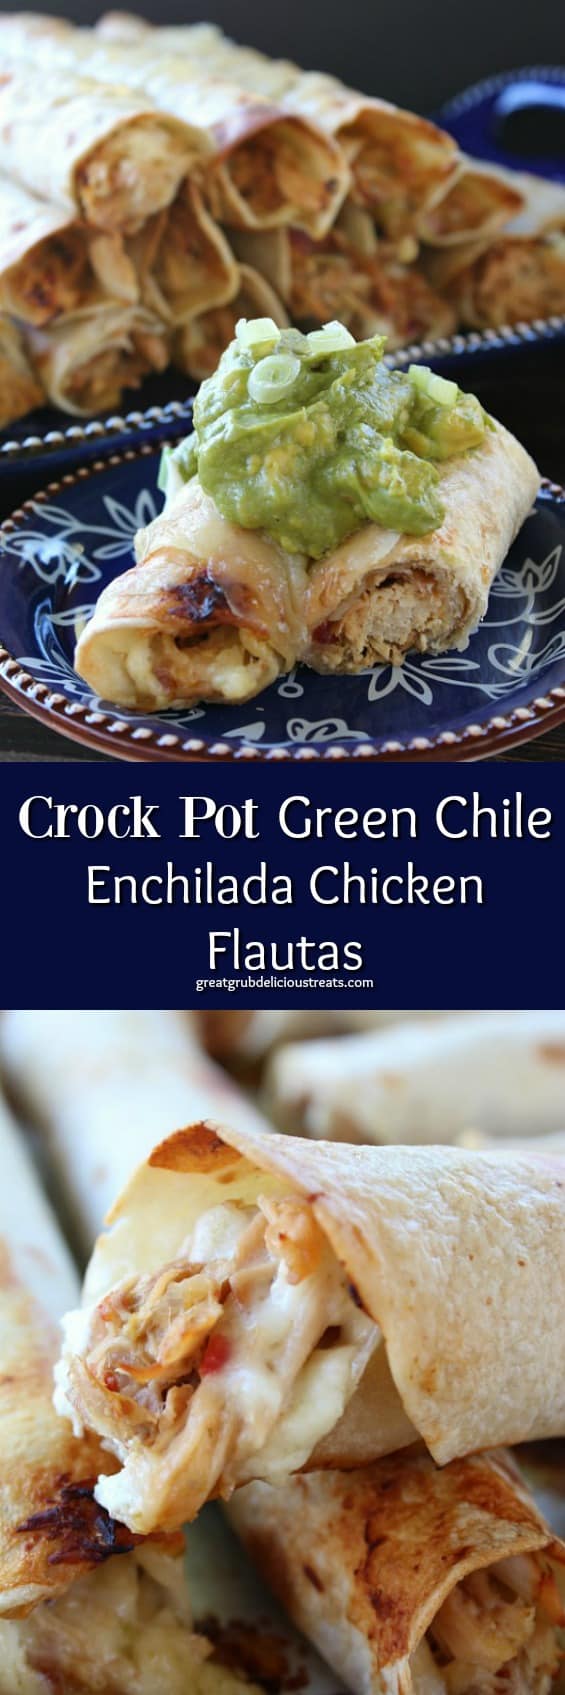 Crock Pot Green Chile Enchilada Chicken Flautas